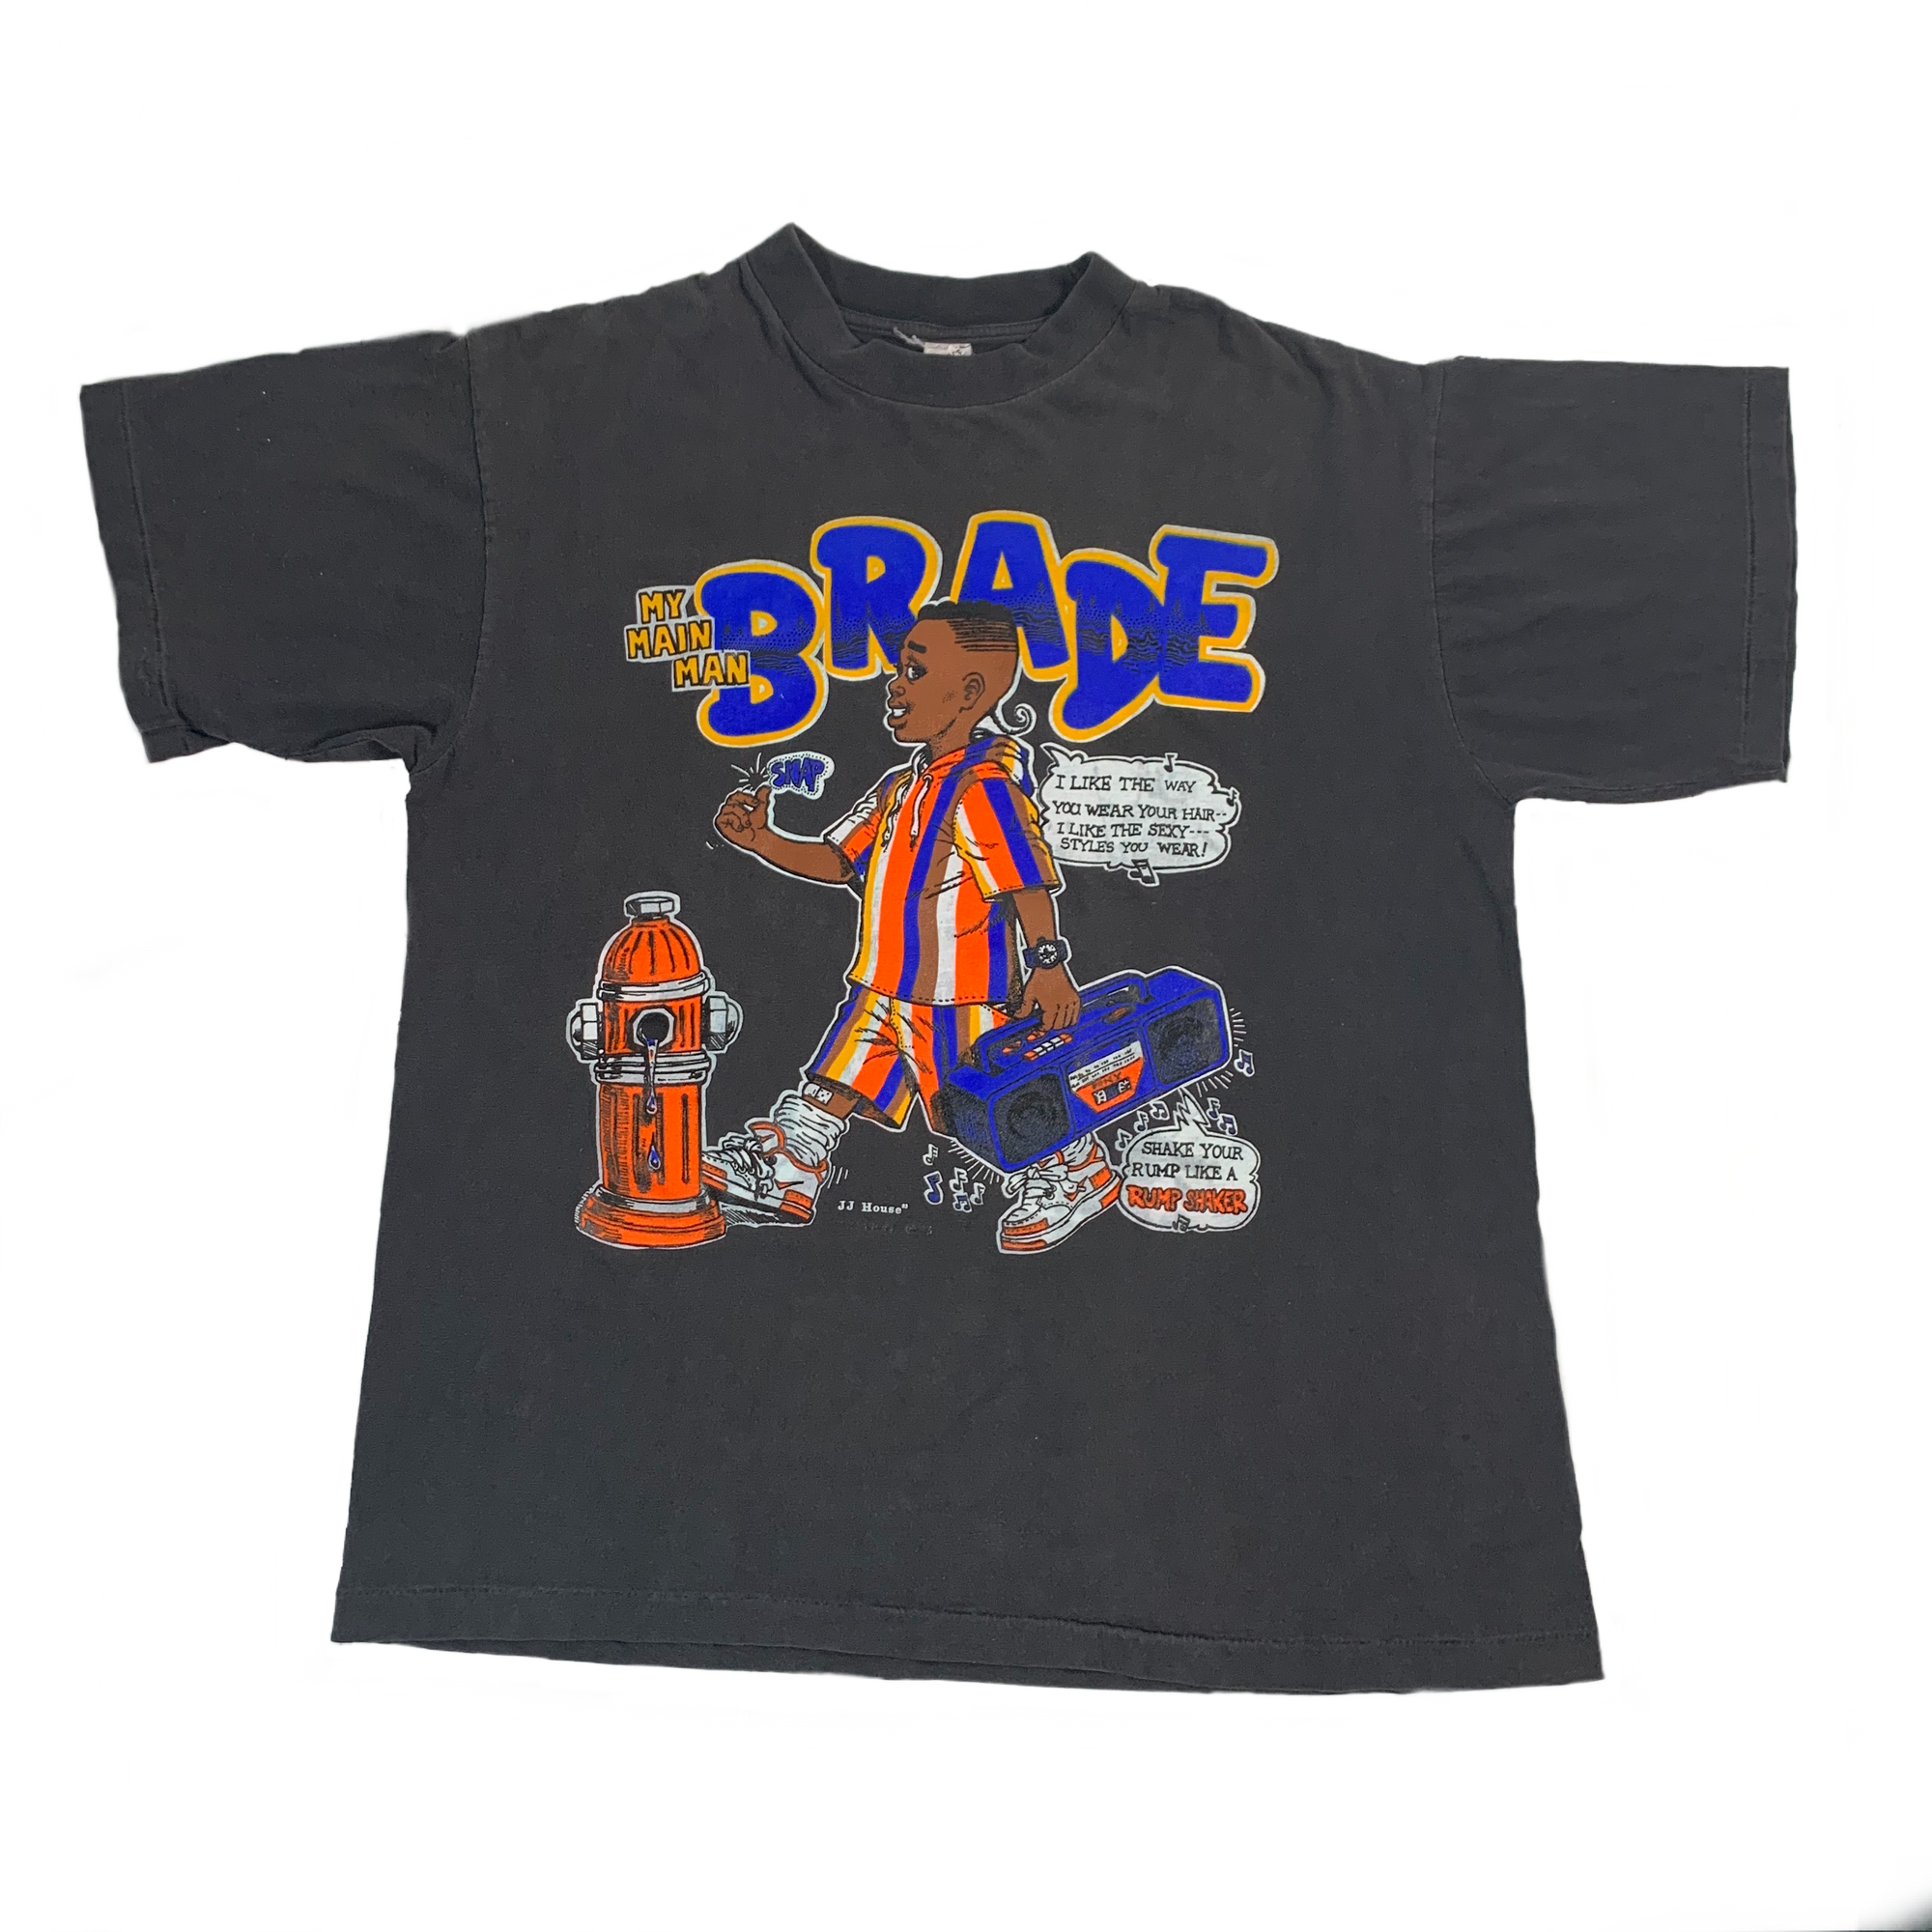 Vintage My Main Man Brade “Rump Shaker” T-Shirt - jointcustodydc